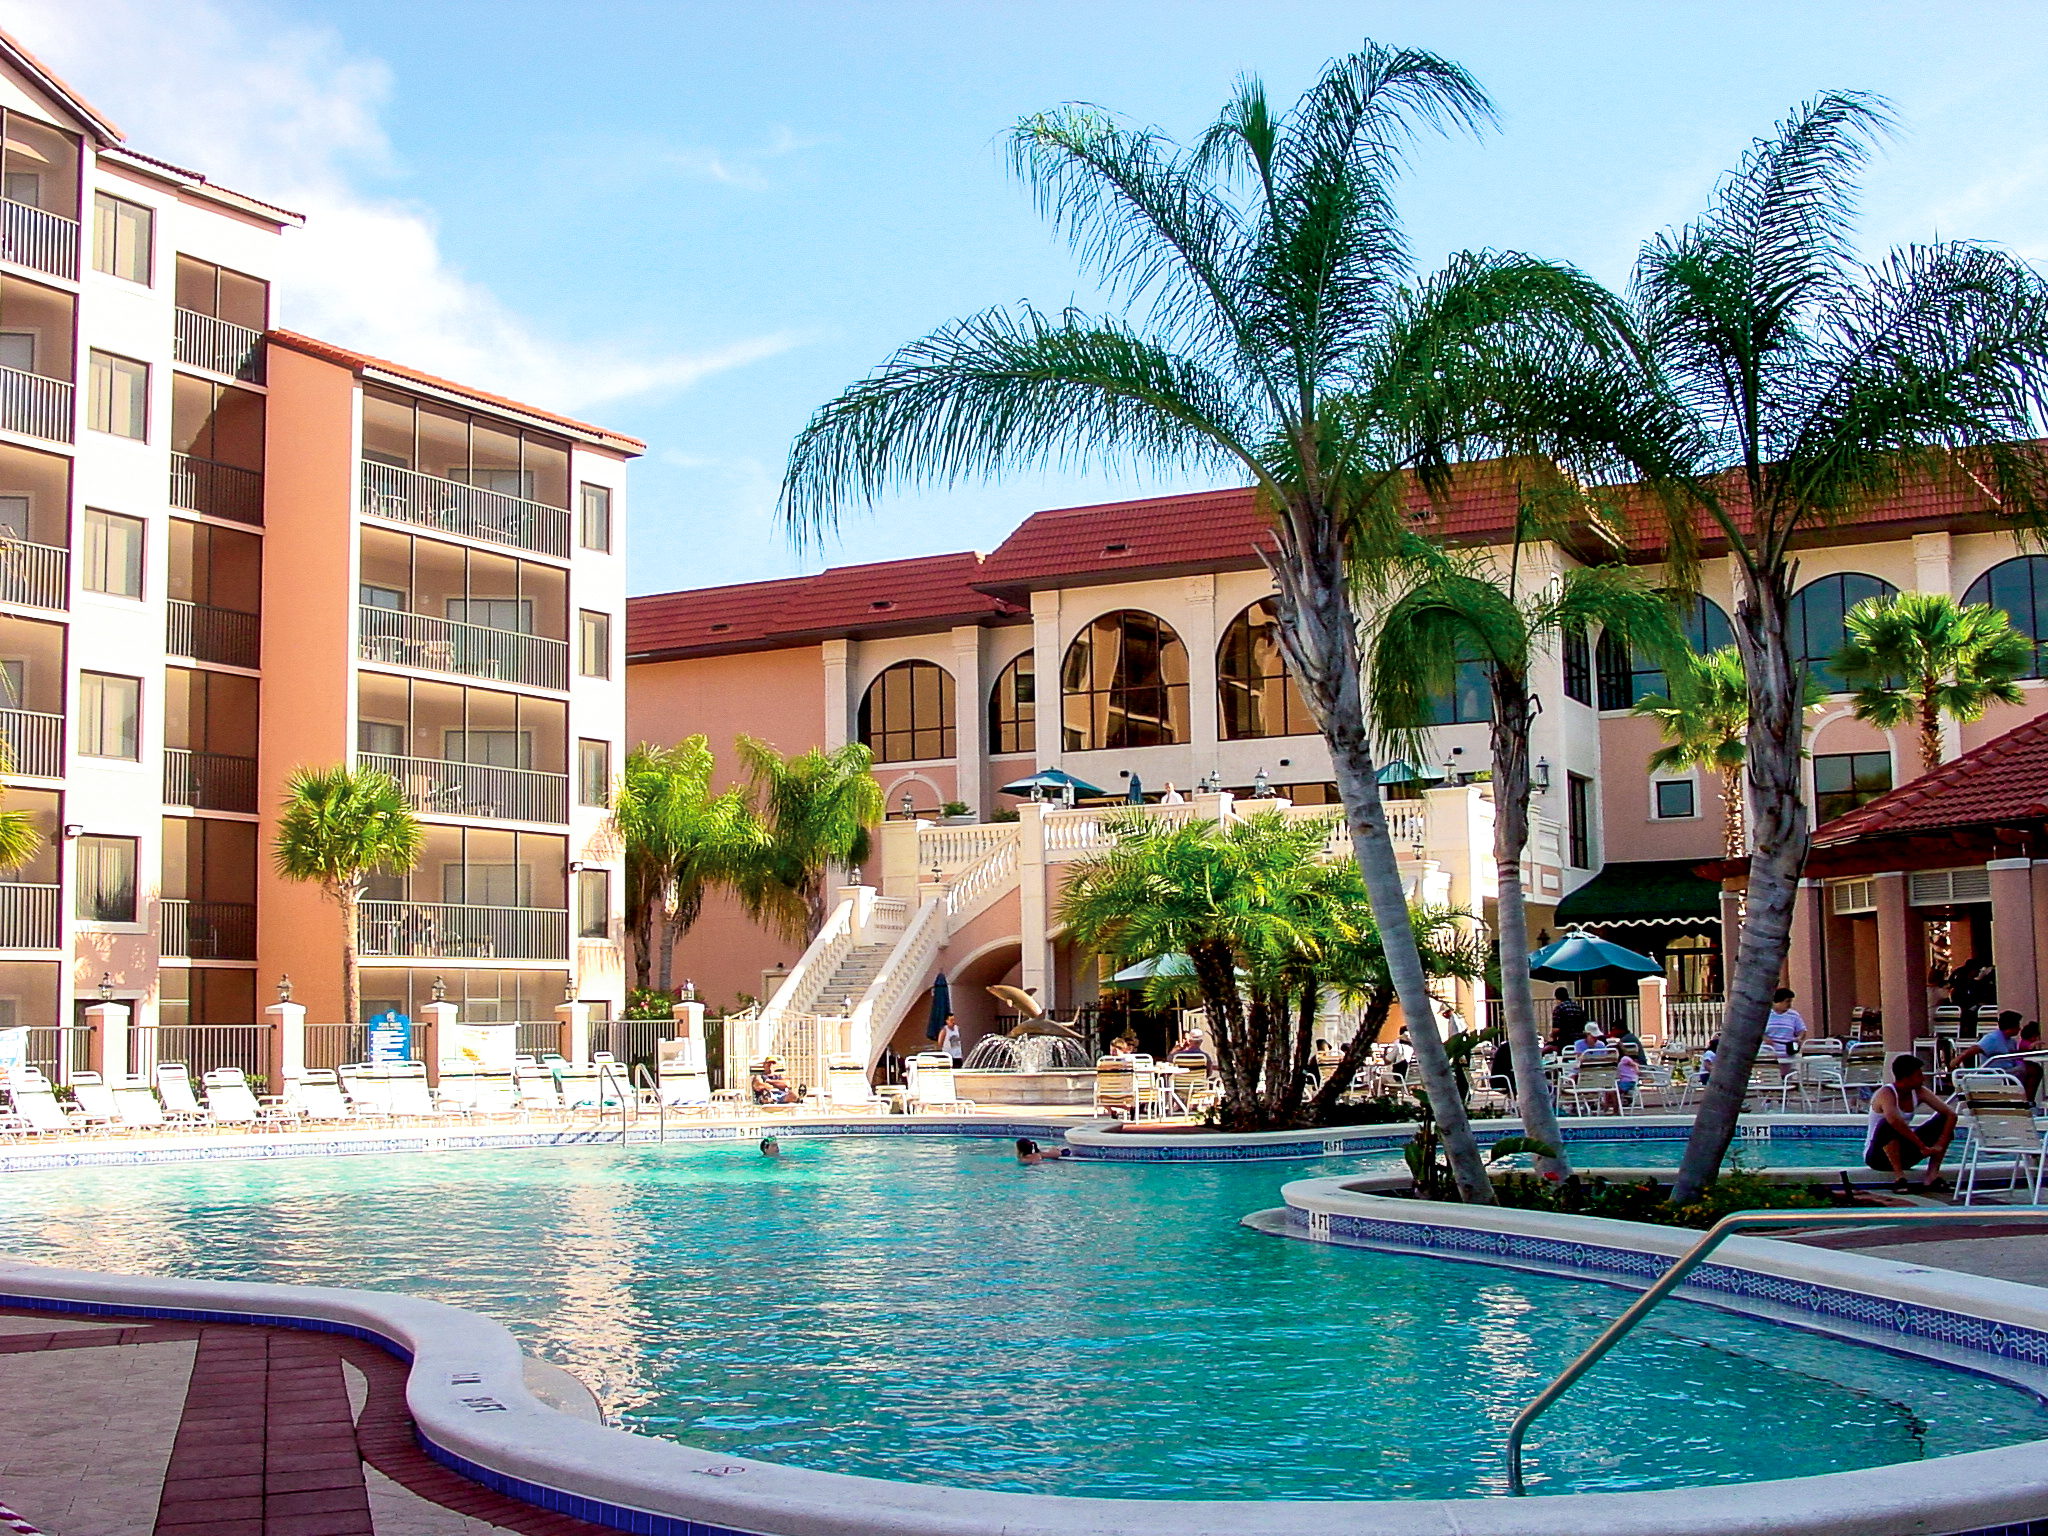 Enjoy a 3-day/2-night Orlando Resort Getaway at Westgate Lakes for $99!